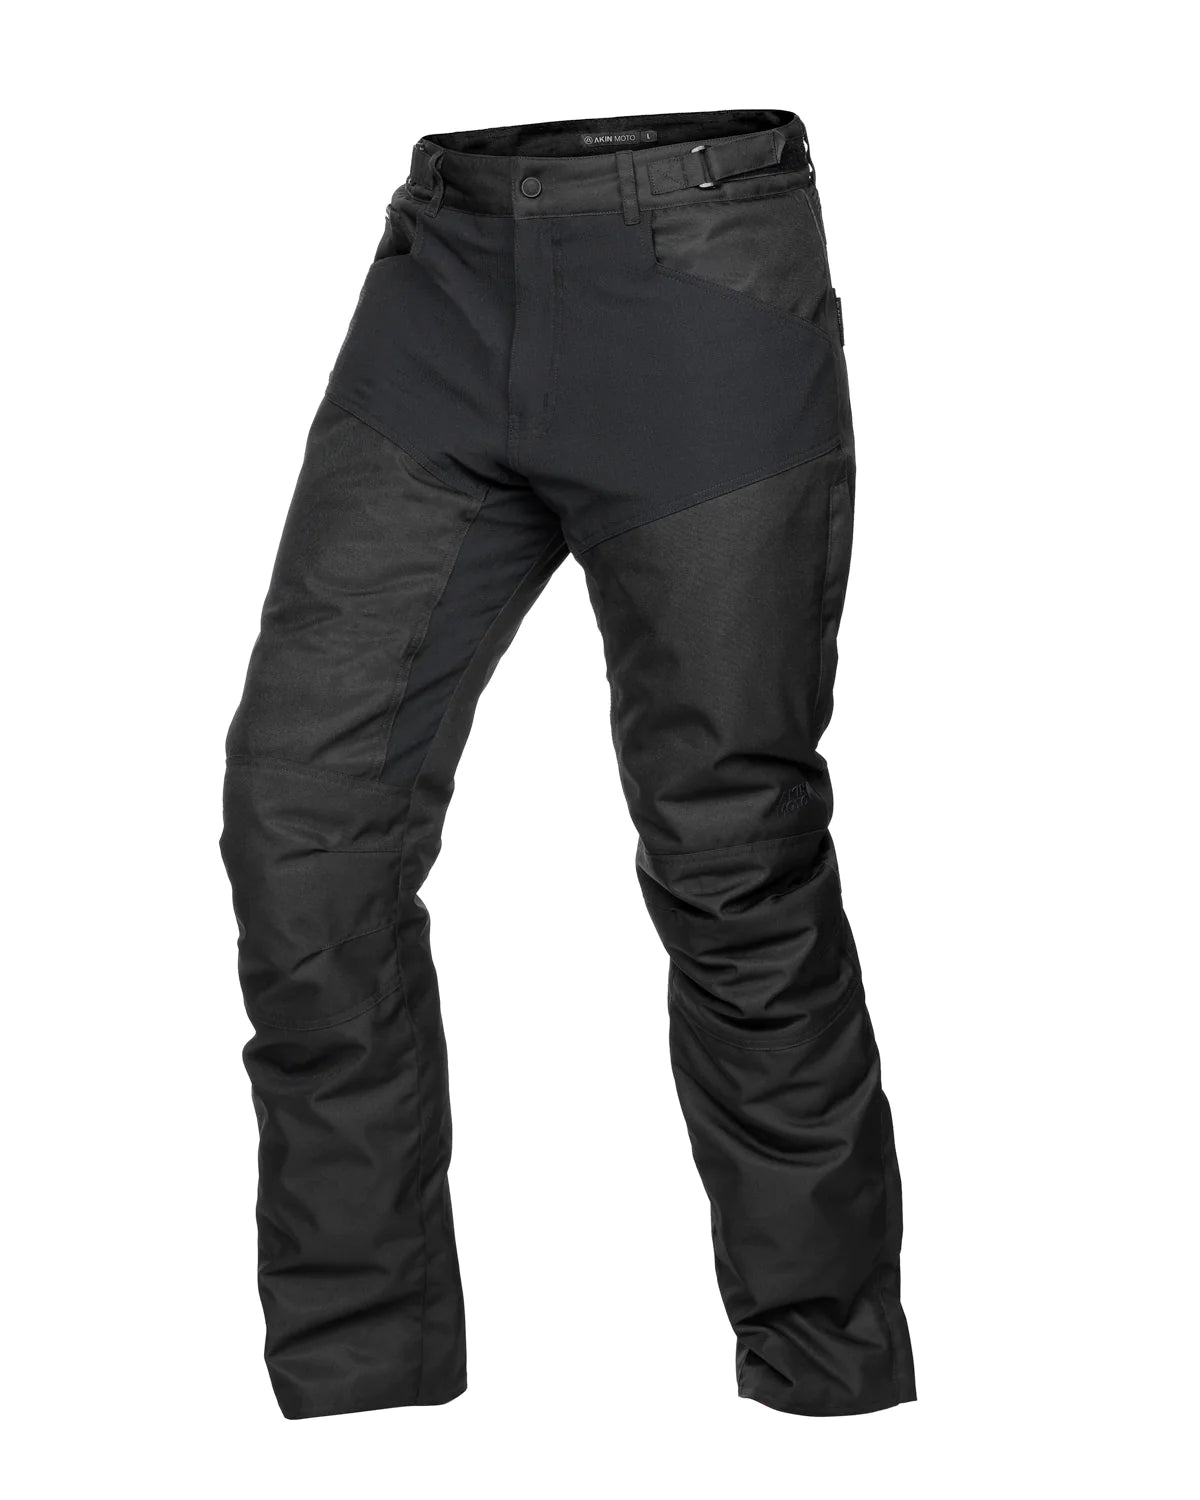 Amazon.com: OMECS Women Motorcycle Riding Jeans Men's Armor Dirt Bike  Motorcycle Pants Hip Knee Pads × 4, Stretch Fabric (Color : Black, Size :  Medium/30) : Automotive